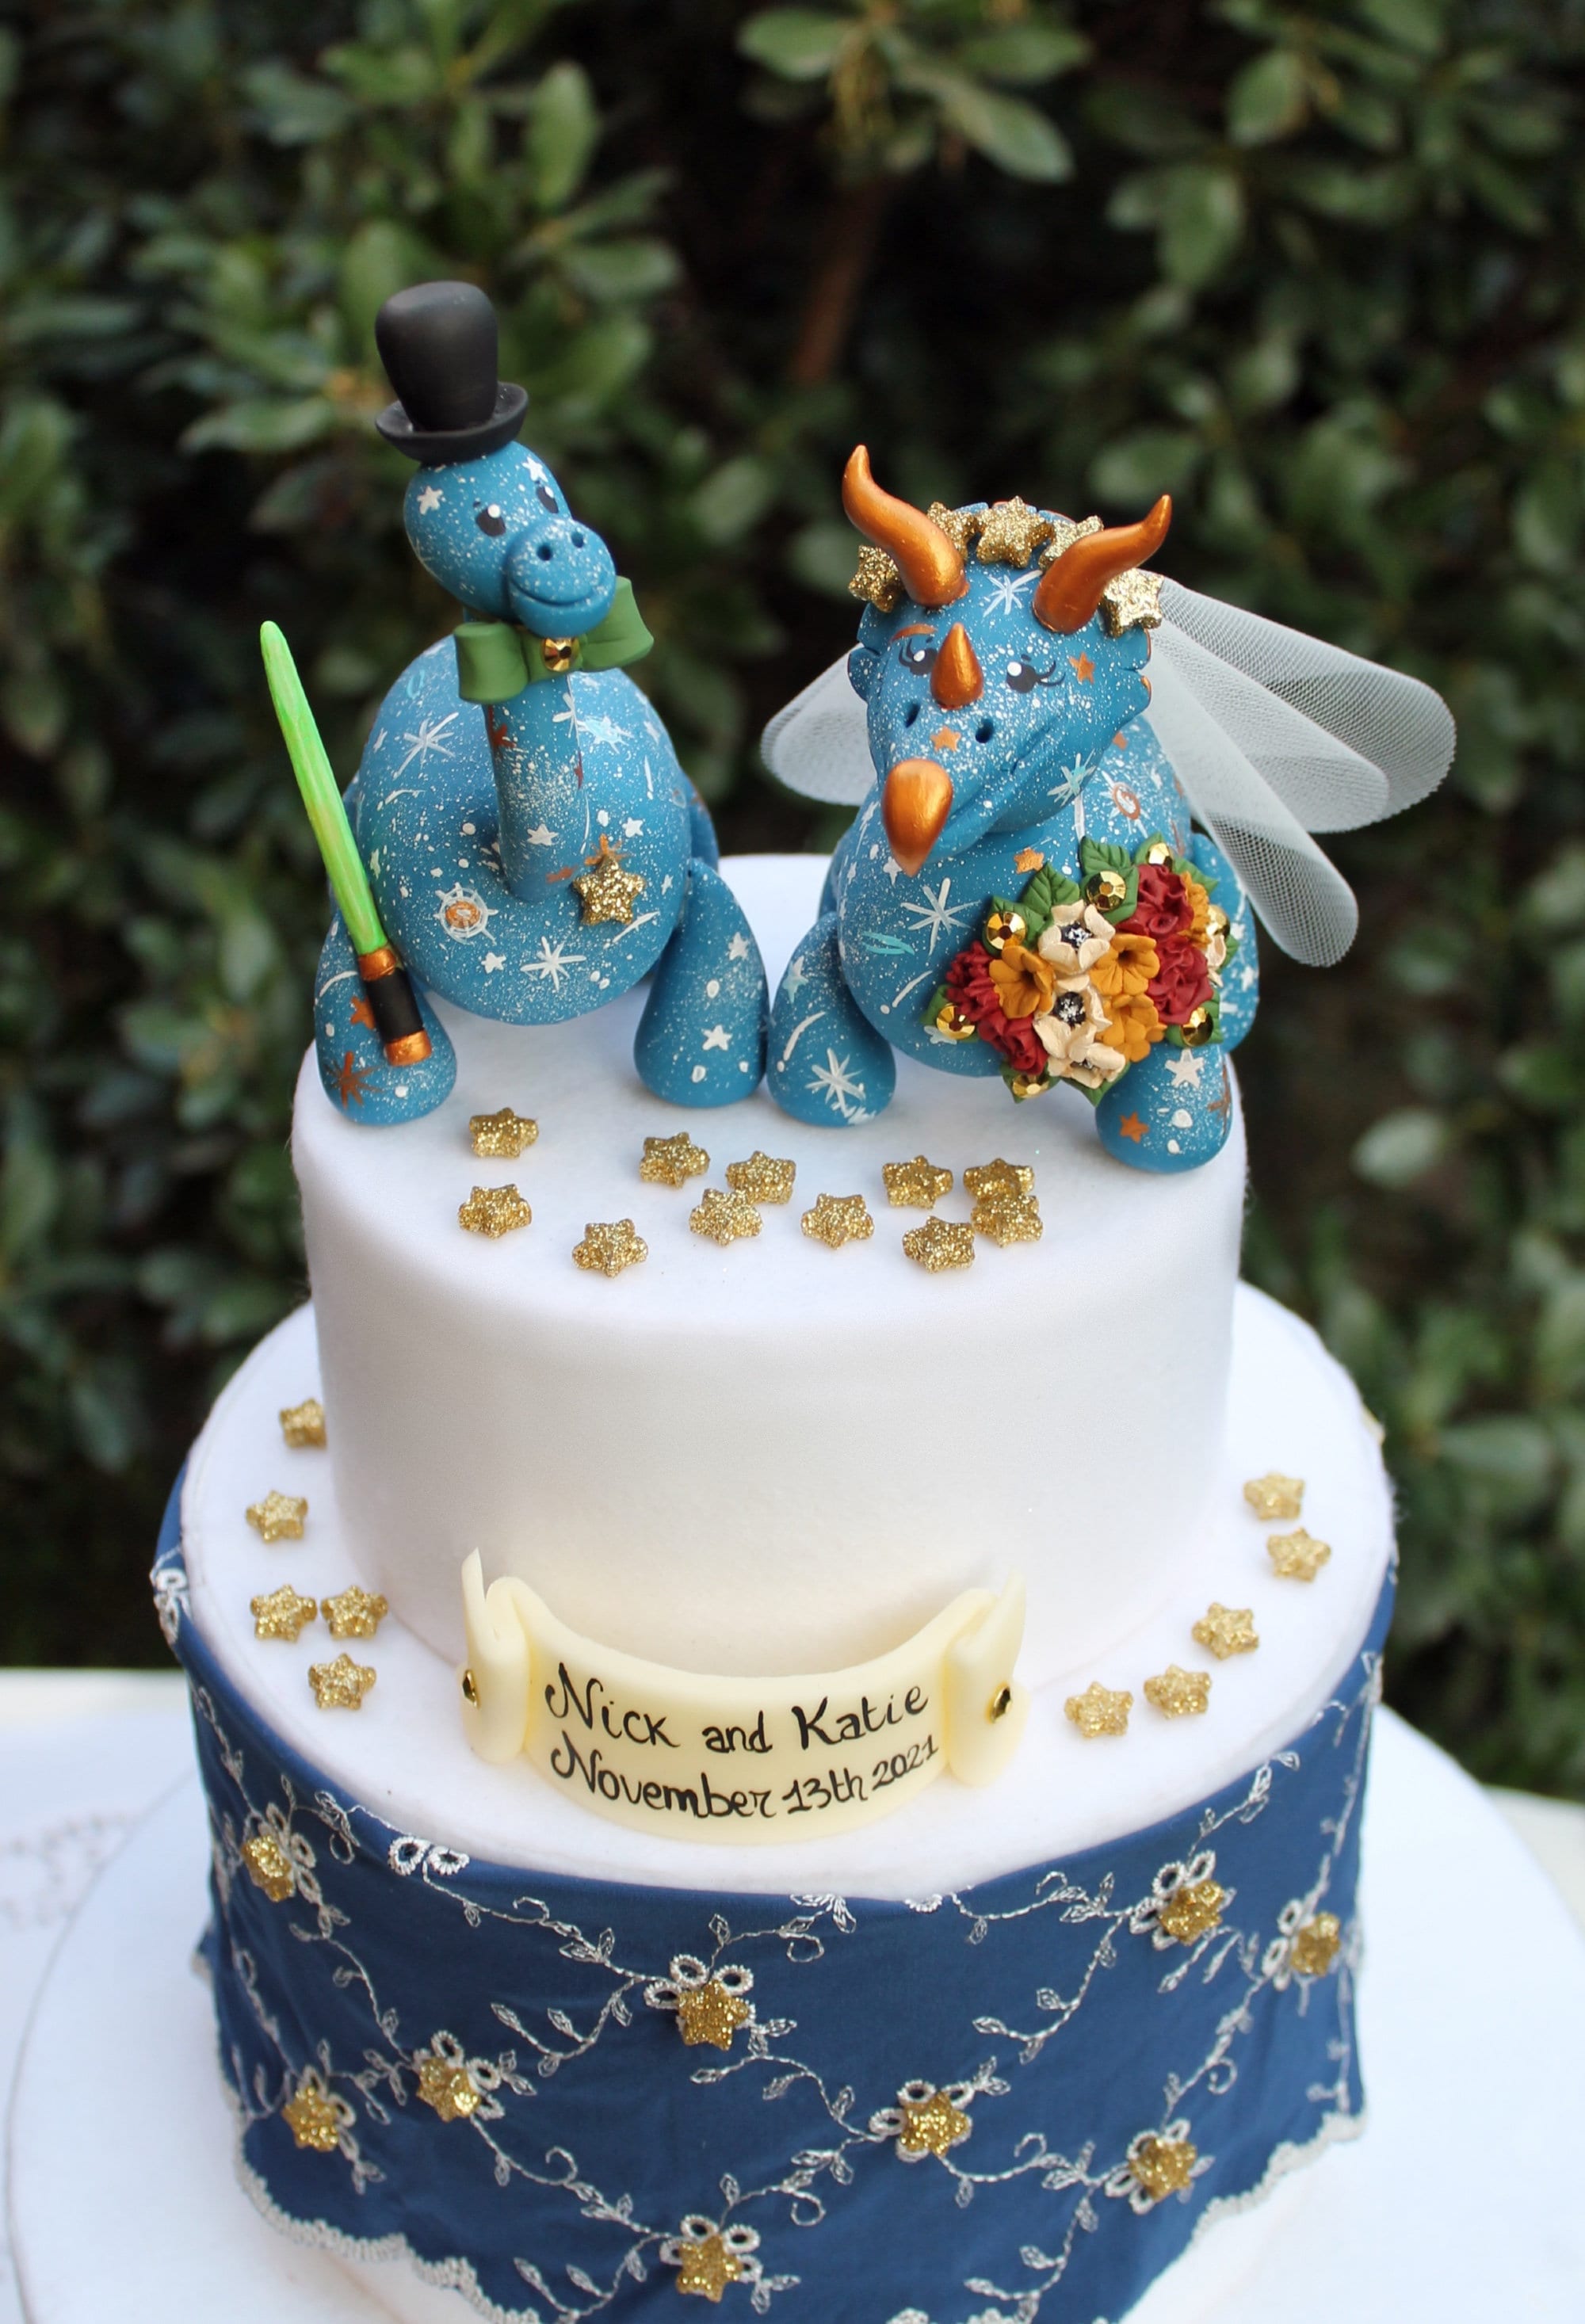 Written In The Stars Romantic Moon and Stars Wedding Cake Topper  68180033119 | eBay